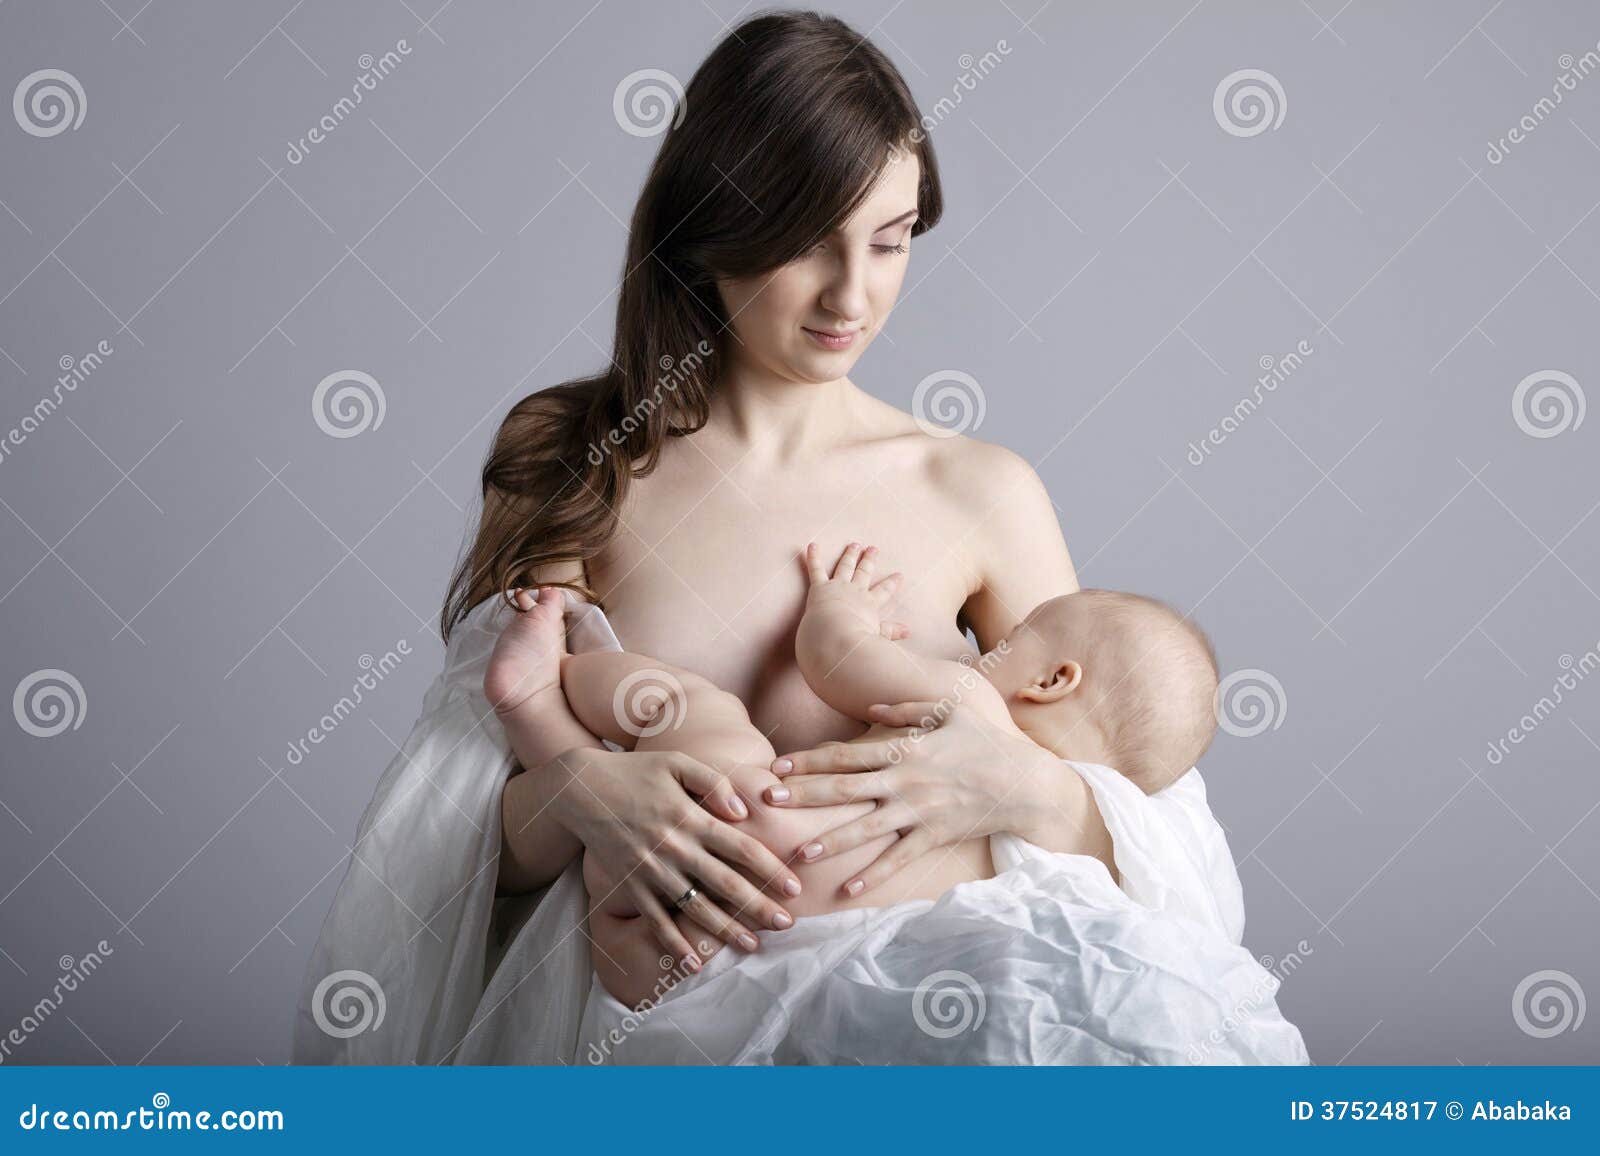 кормящая мама застужена грудь фото 81